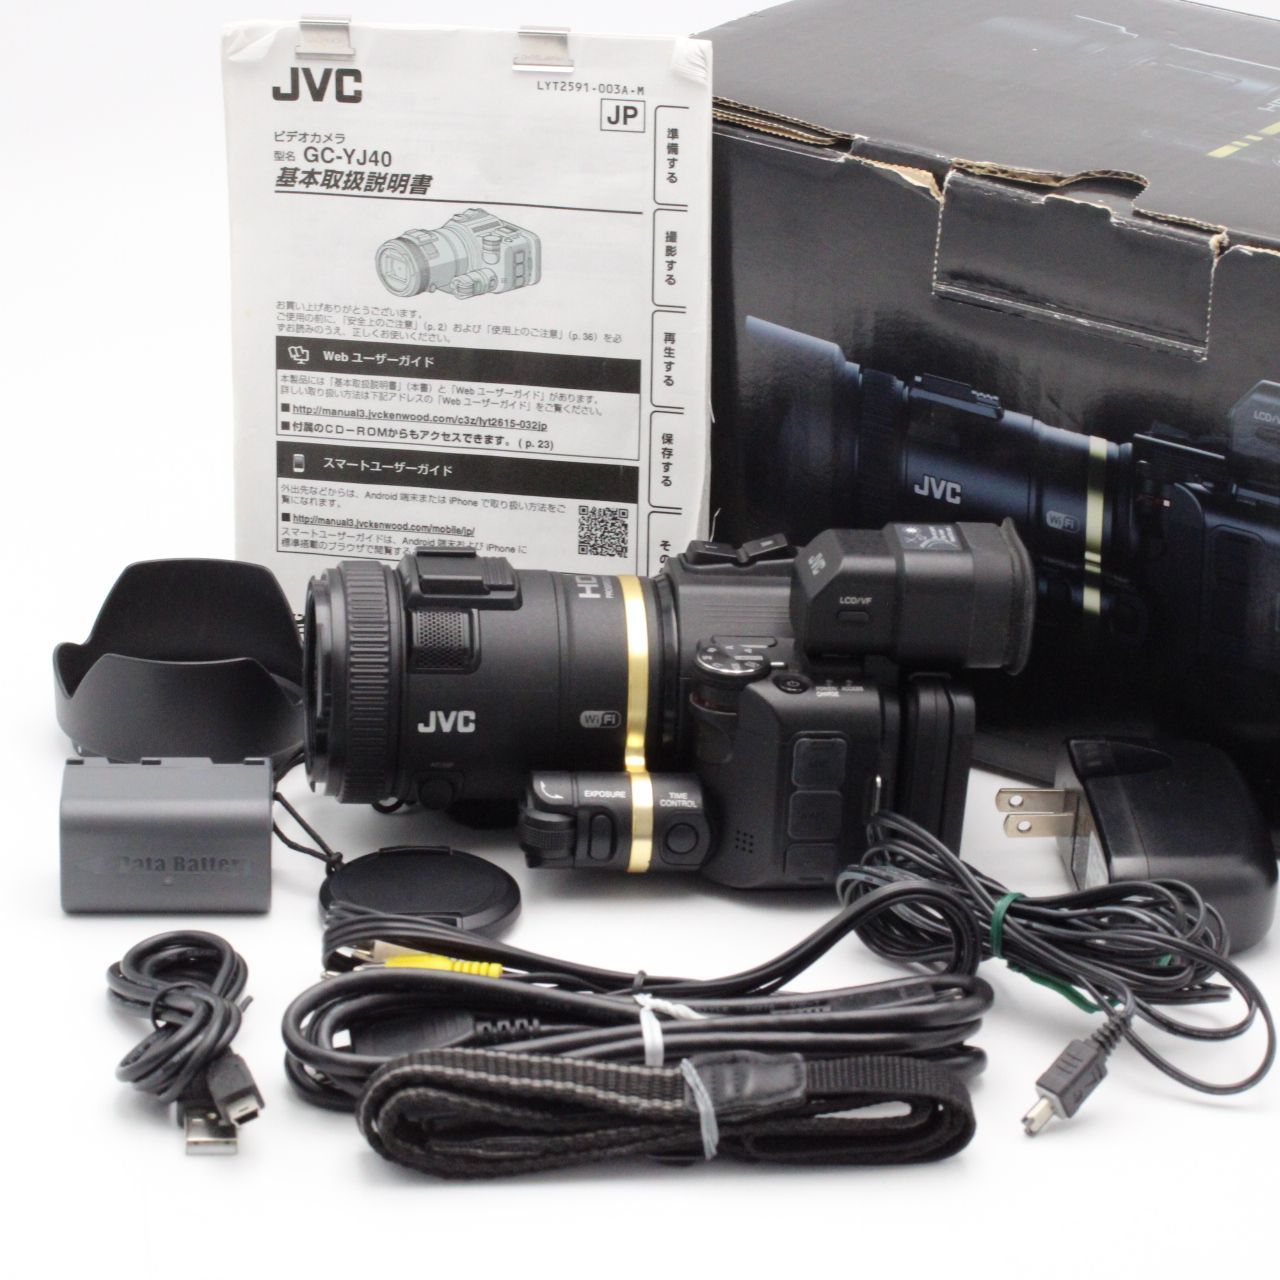 JVC GC-YJ40 ビクター ハイビジョン メモリームービー GC-P100量販店モデル #2833 - メルカリ